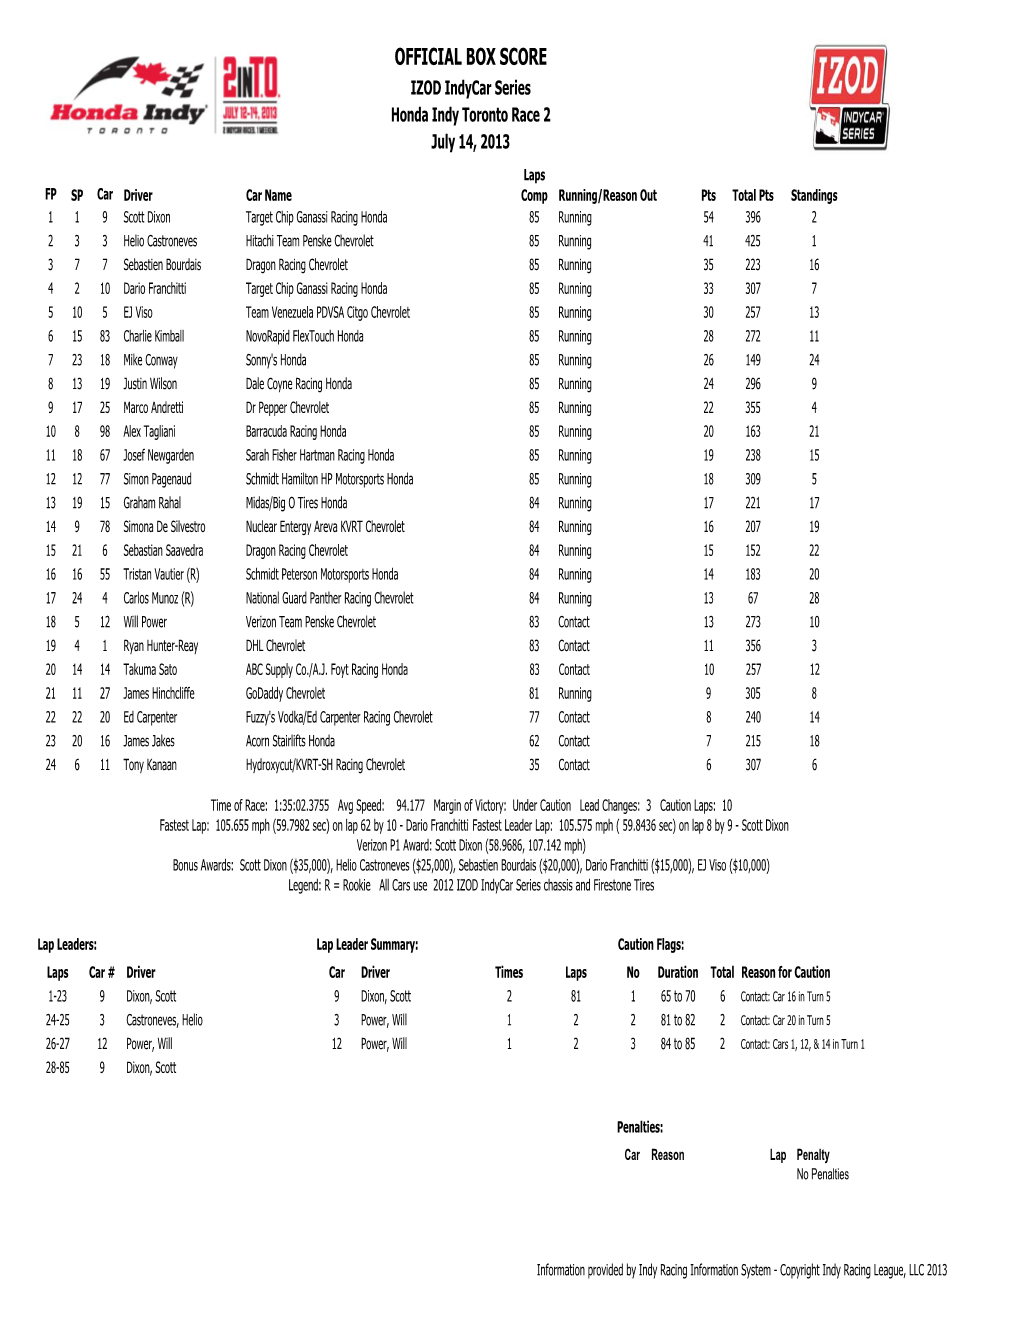 Honda Indy Toronto Race 2 Box Score